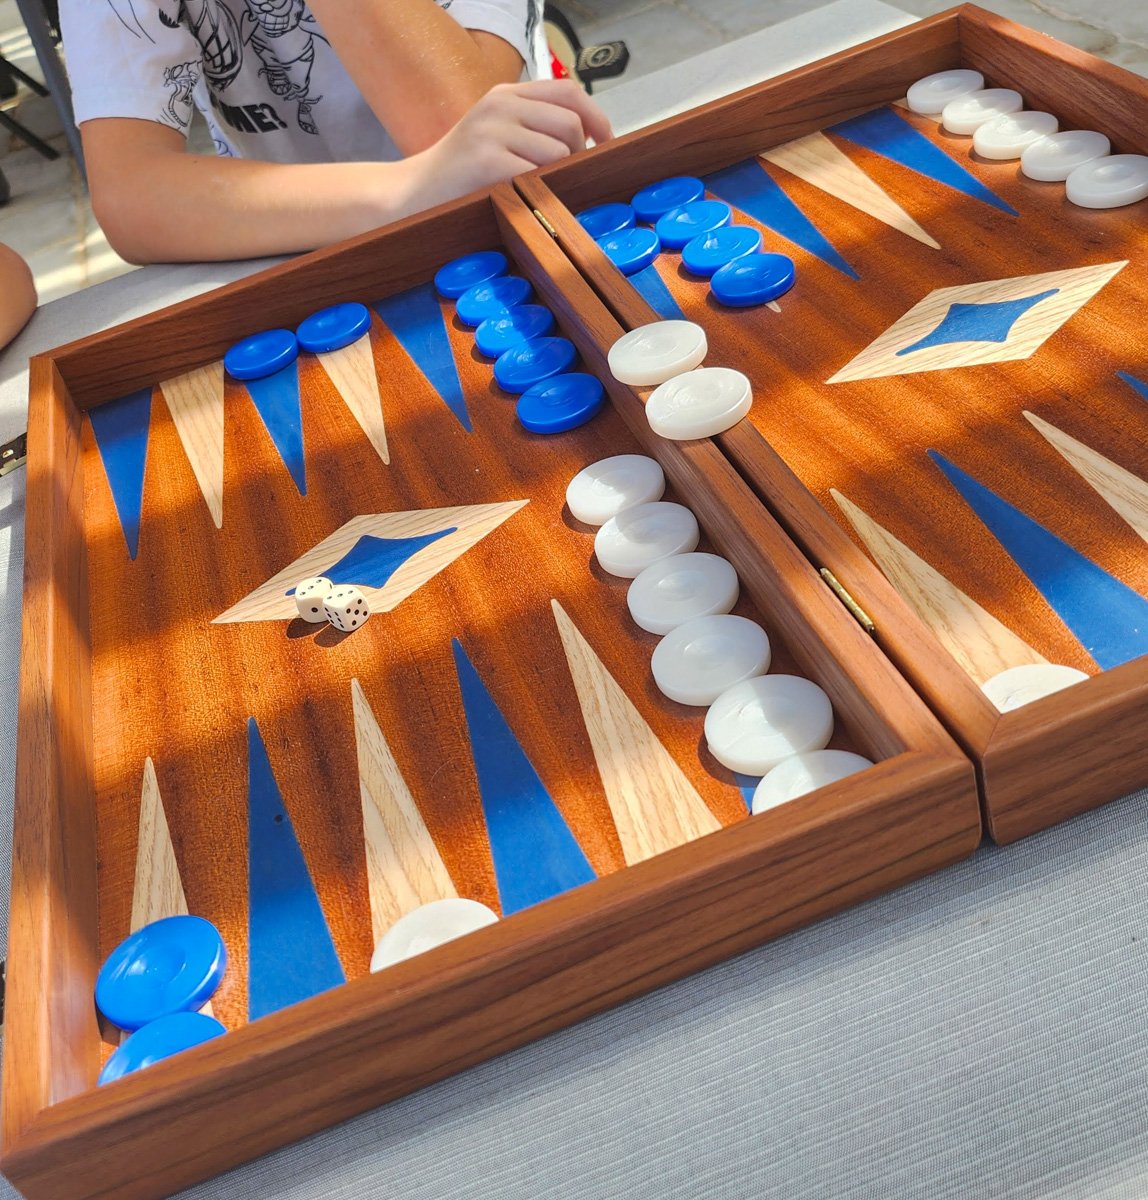 Get a traditional Greek wooden backgammon board as a souvenir from Greece.